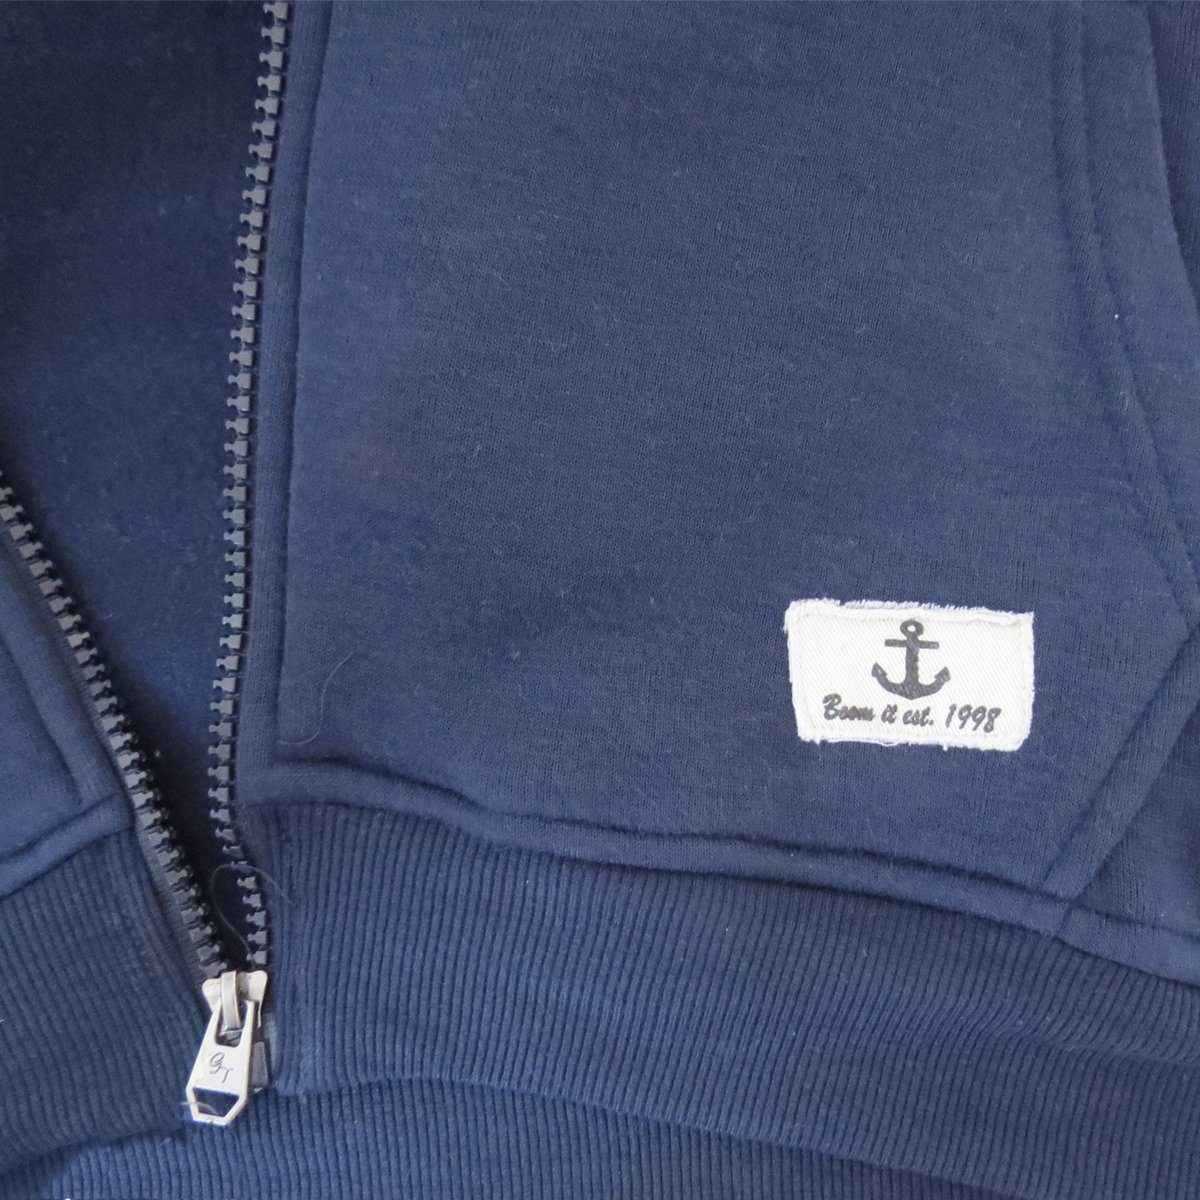 Sonia Originelli T-Shirt Sweatjacke unifarben Hoodie Damen marine "Hamburg" bestickt